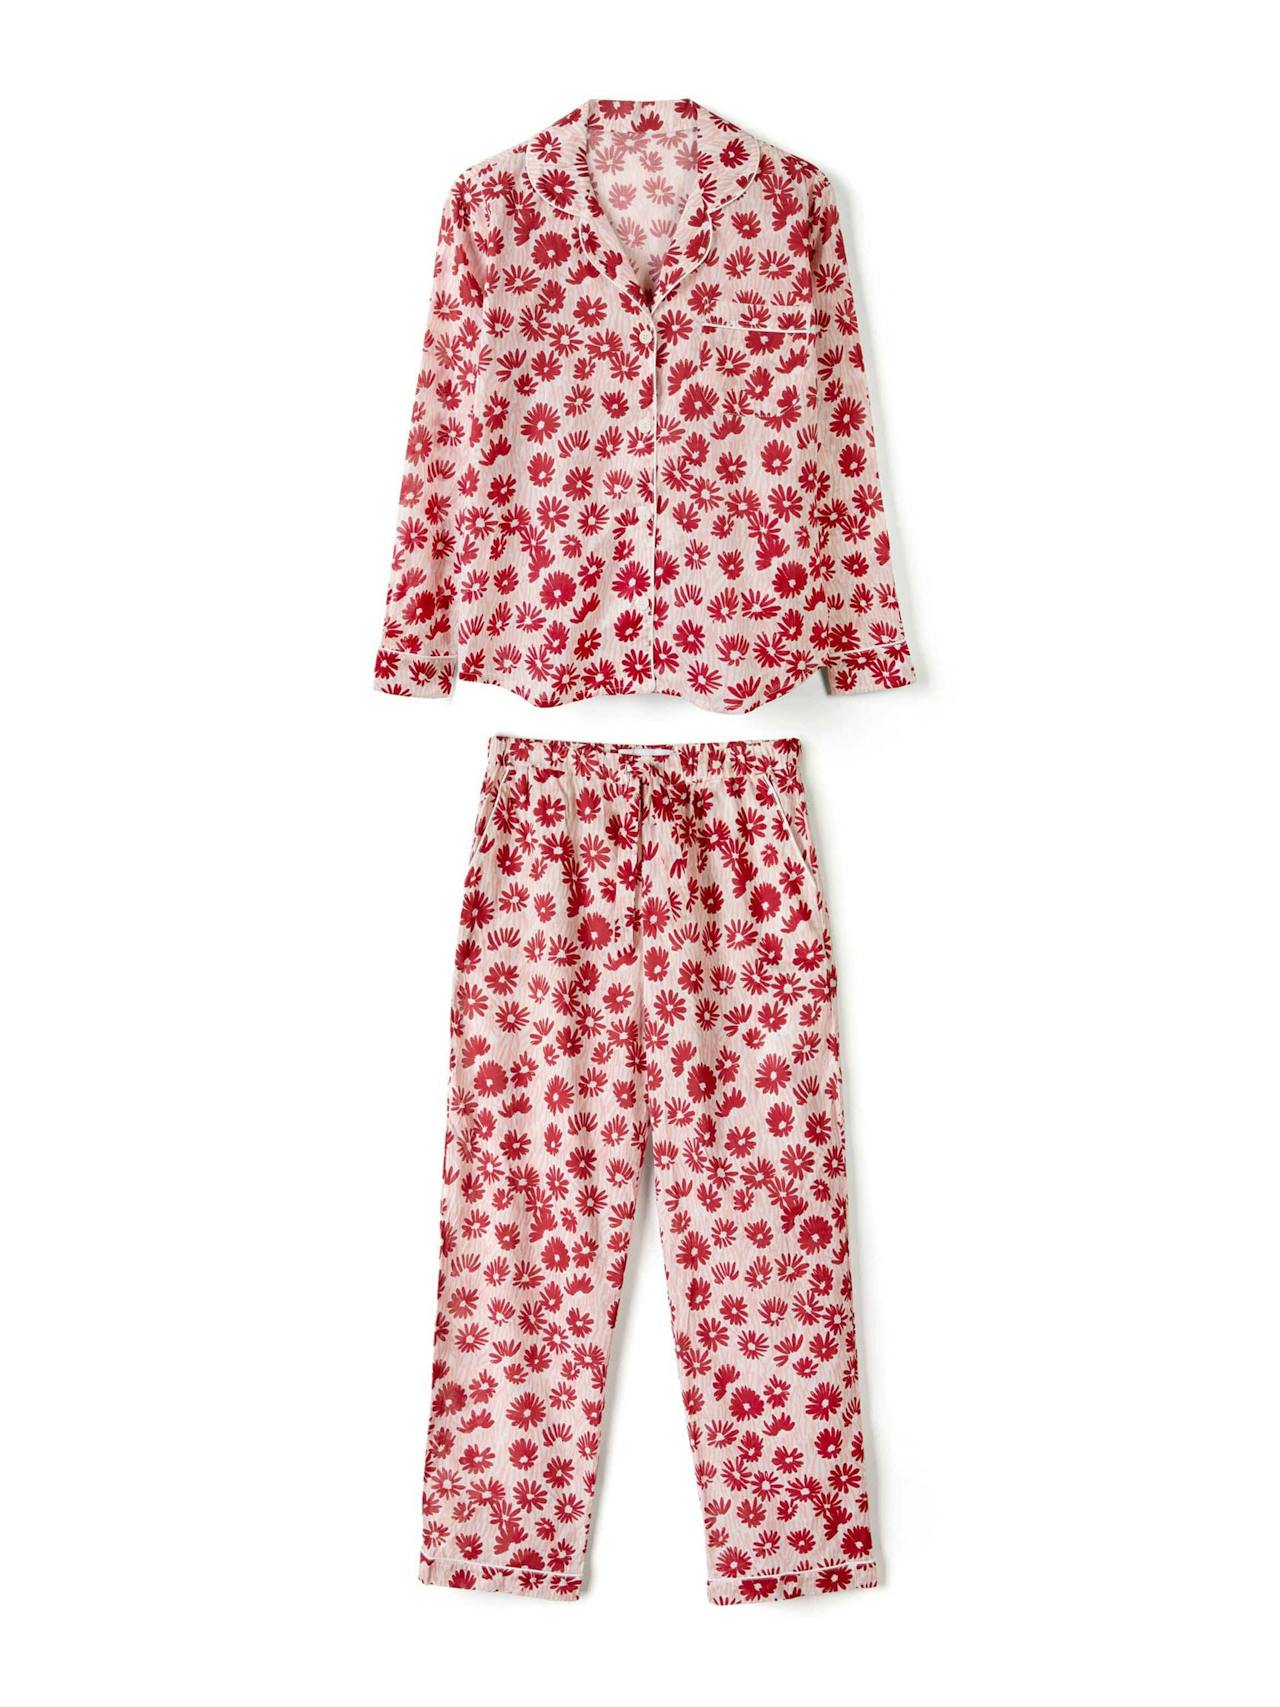 Long pyjama set chamomile print pink/red